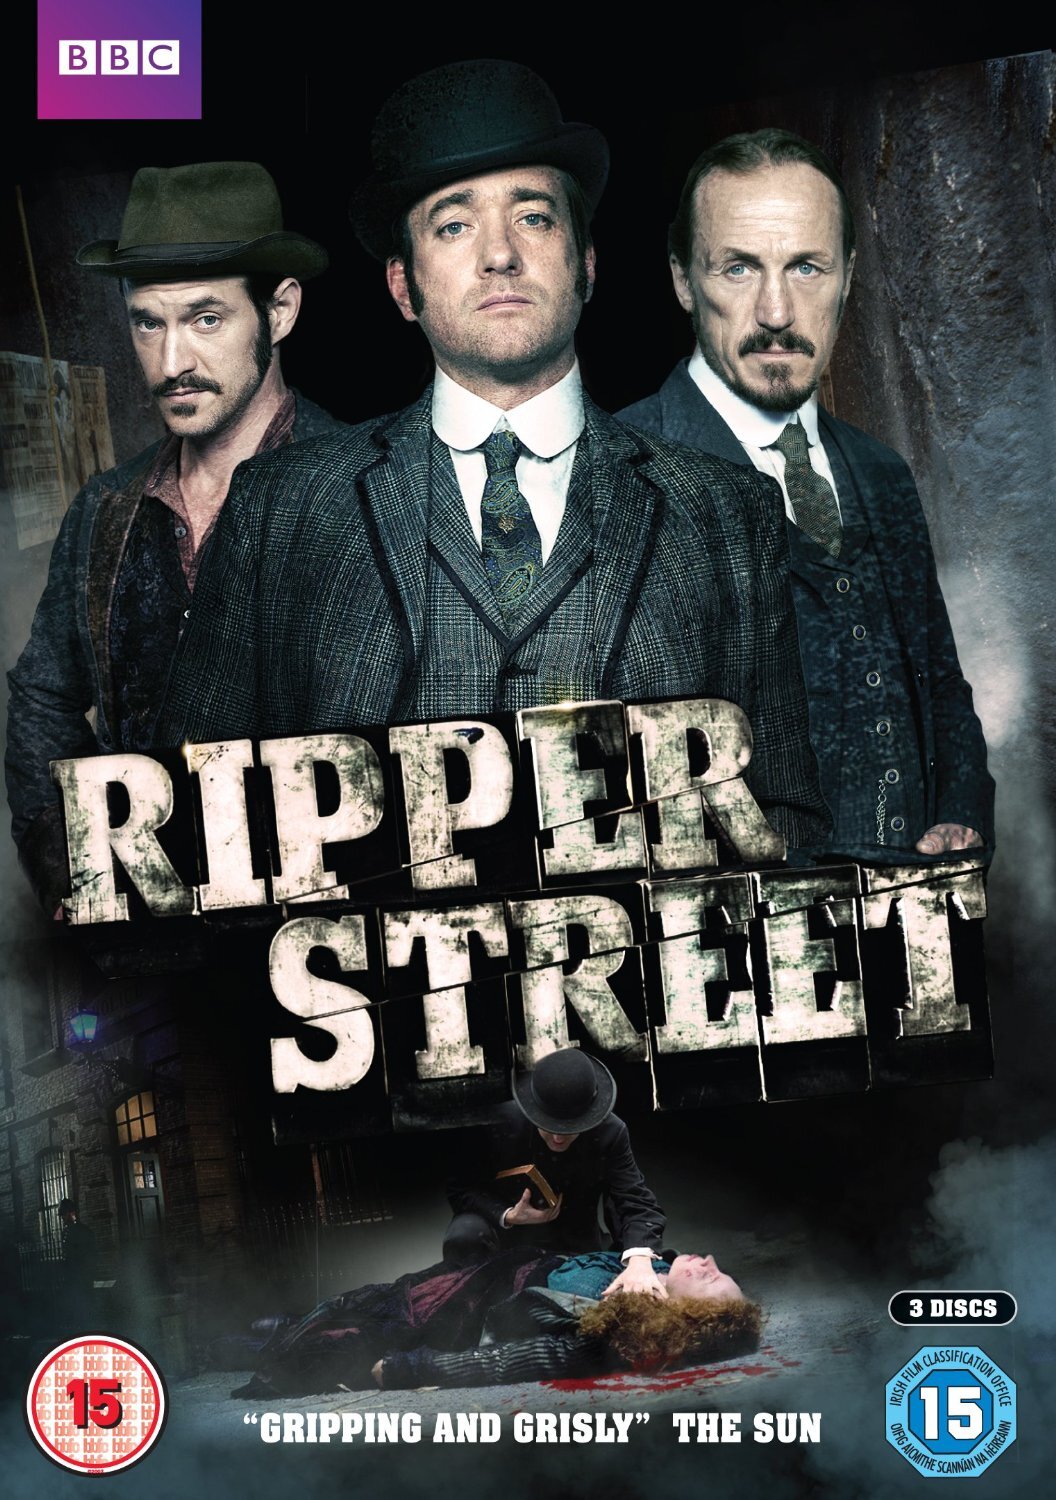 MyAnna Buring Ripper Street - Seizoen 3 dvd